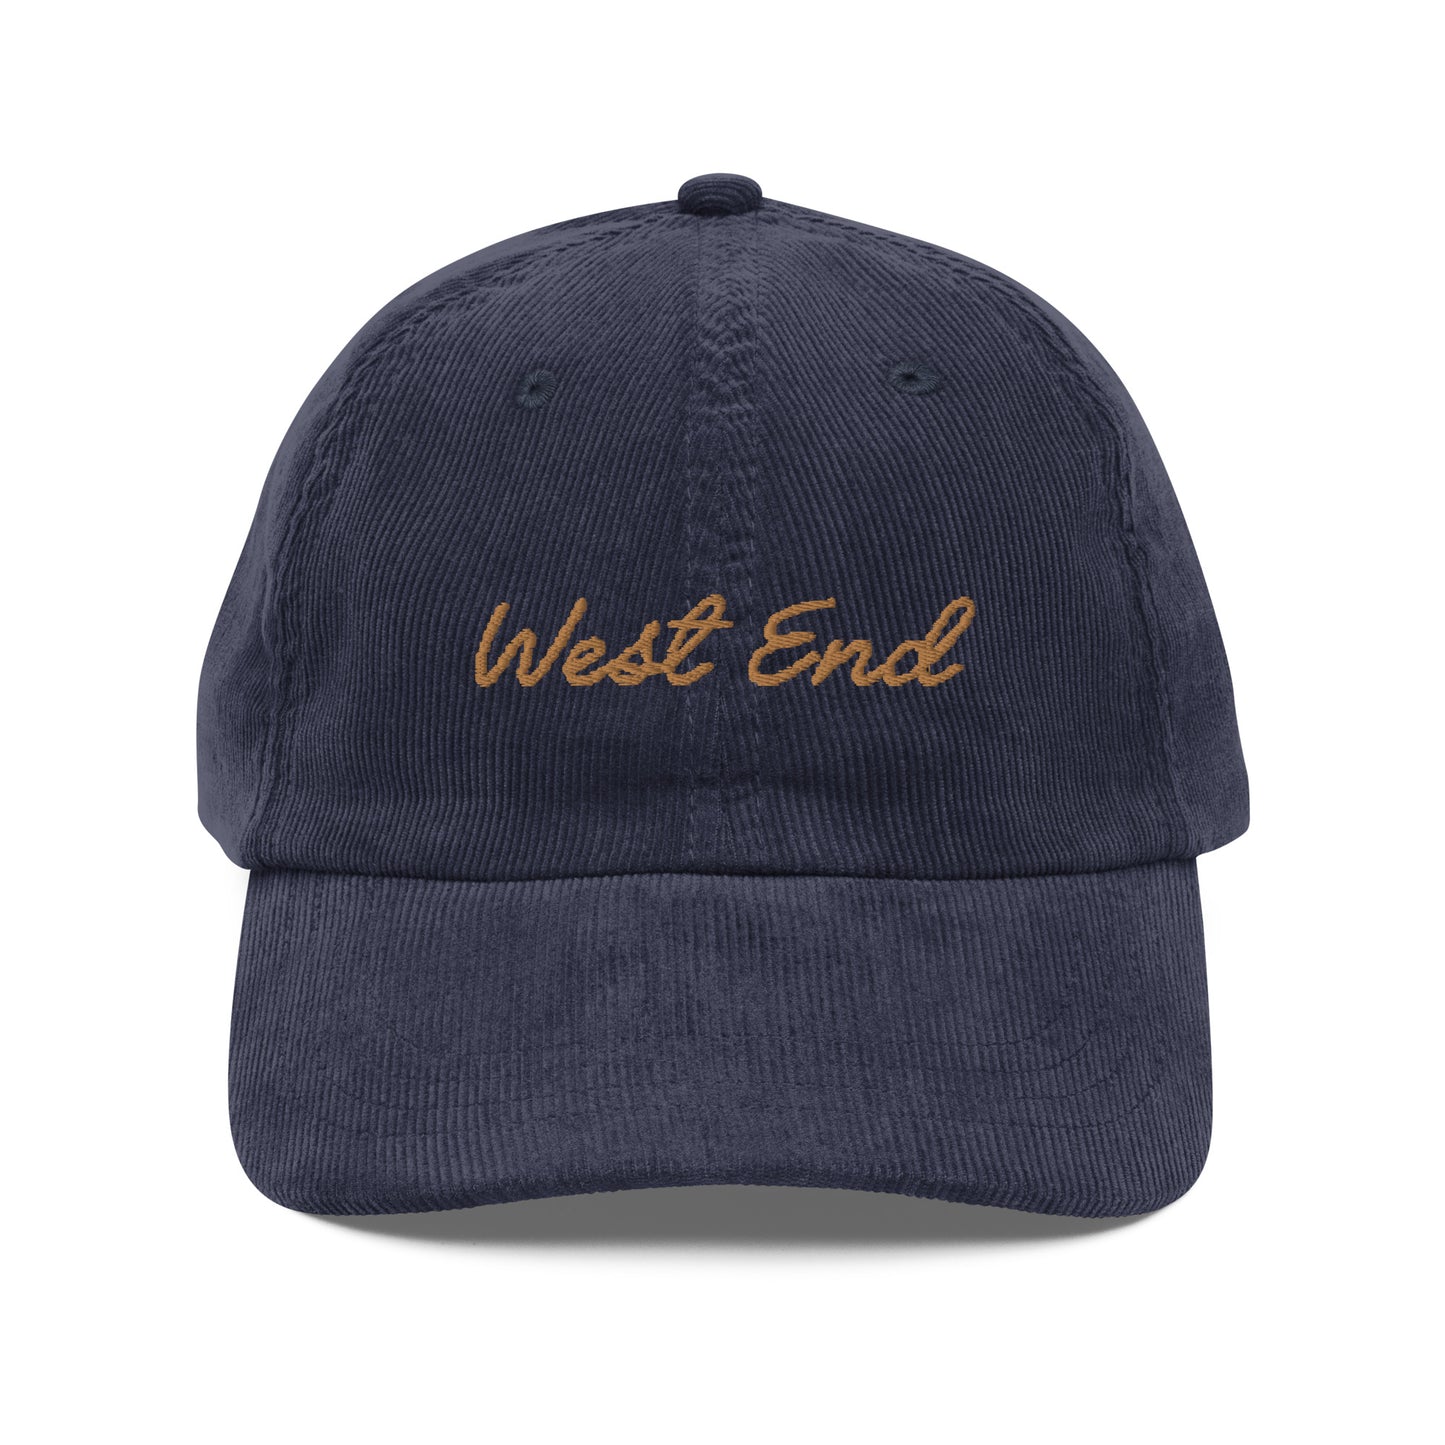 West End Corduroy Dad Hat